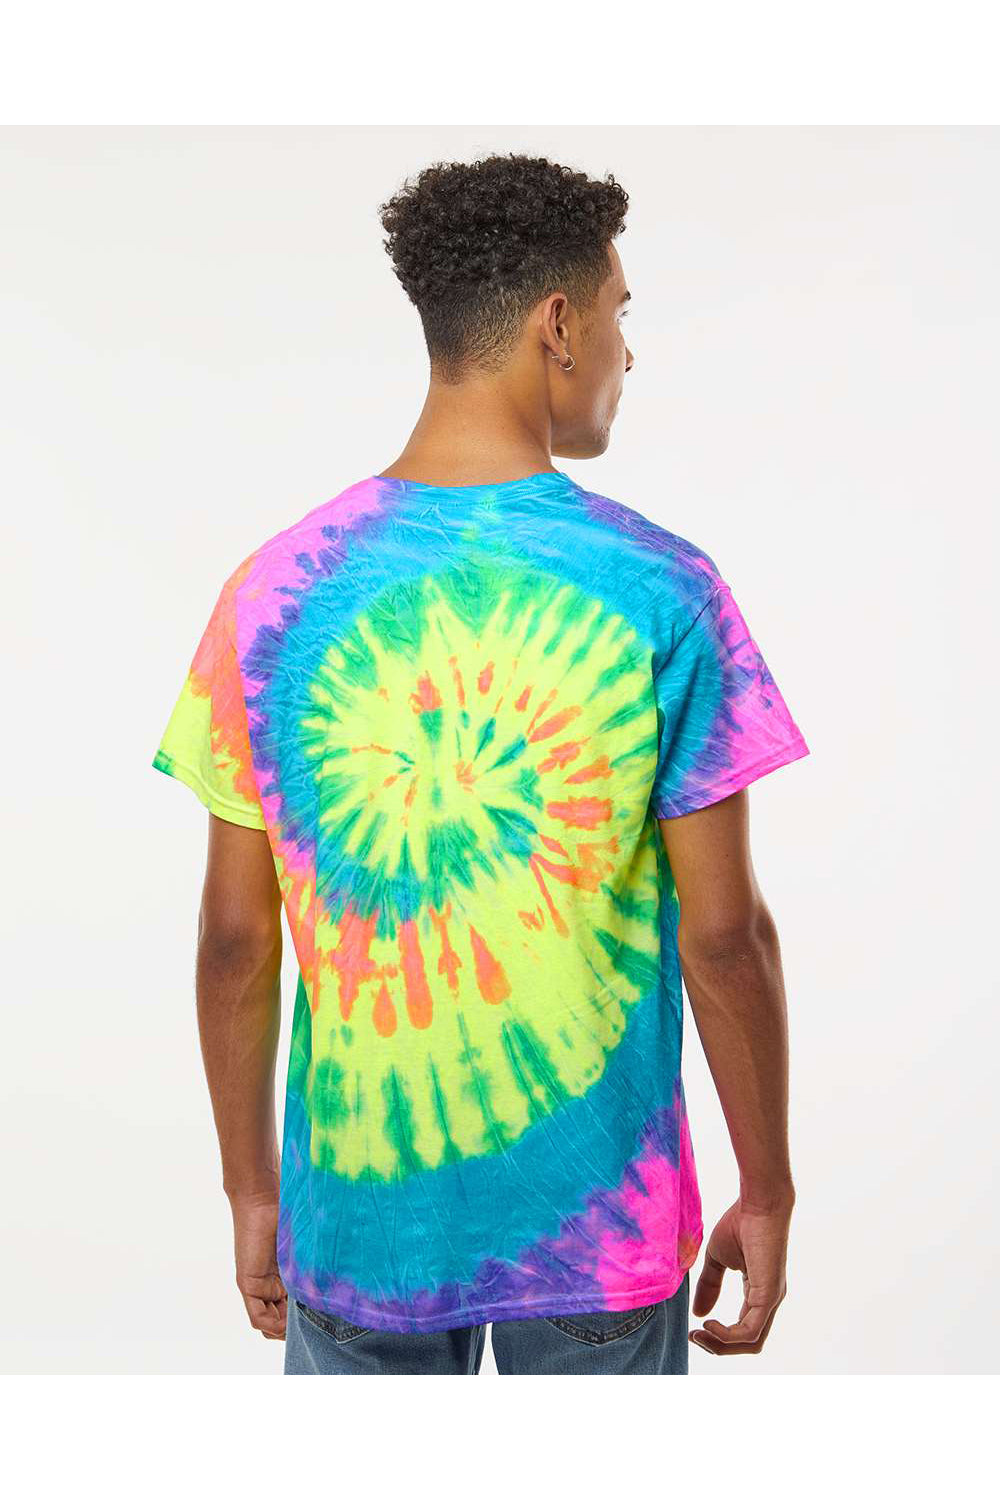 Colortone 1000 Mens Short Sleeve Crewneck T-Shirt Neon Rainbow Model Back